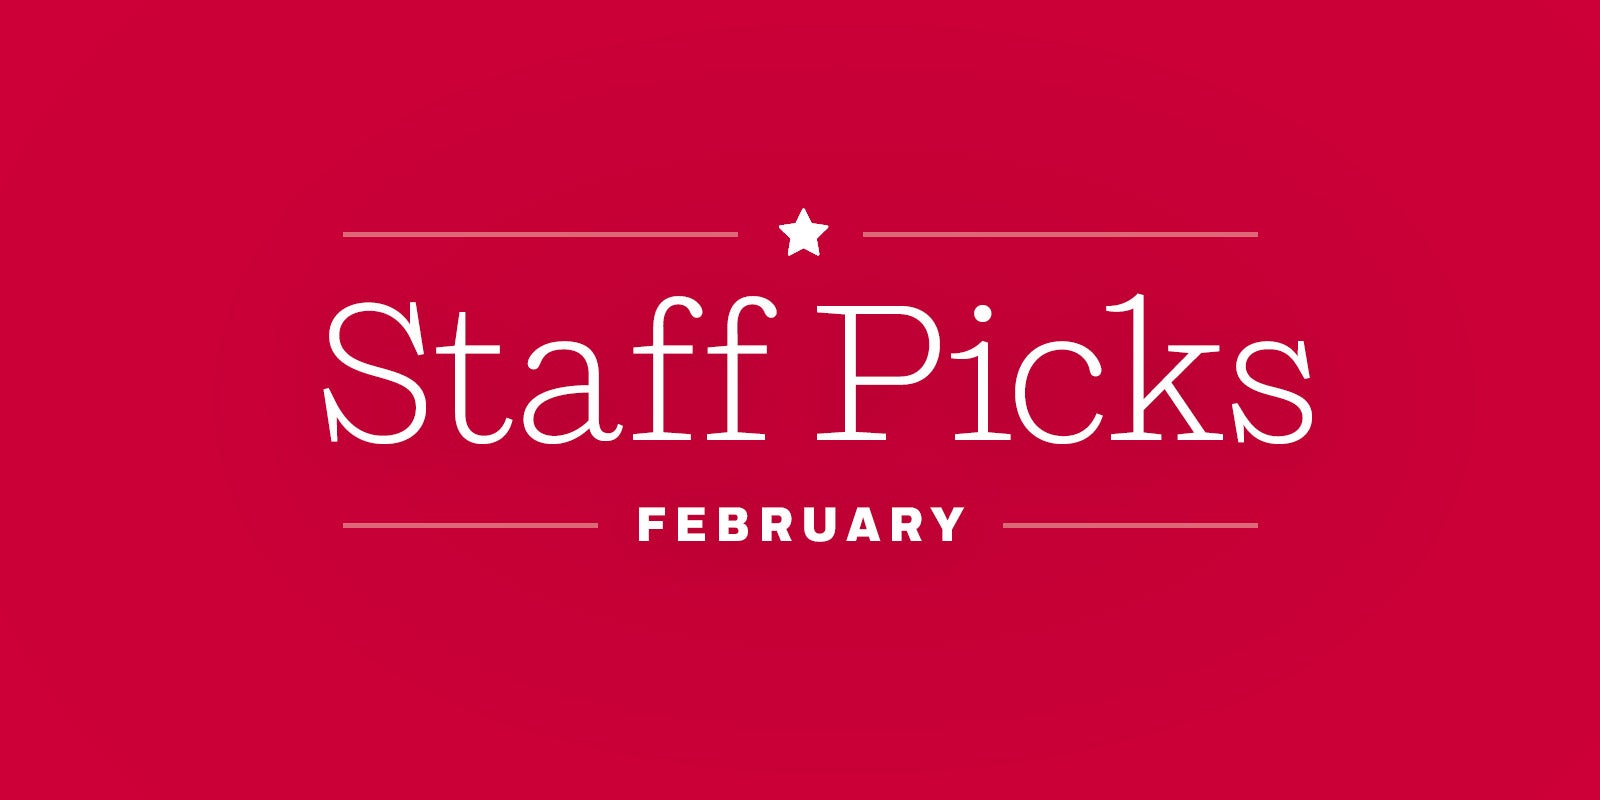 ** February Staff Picks **